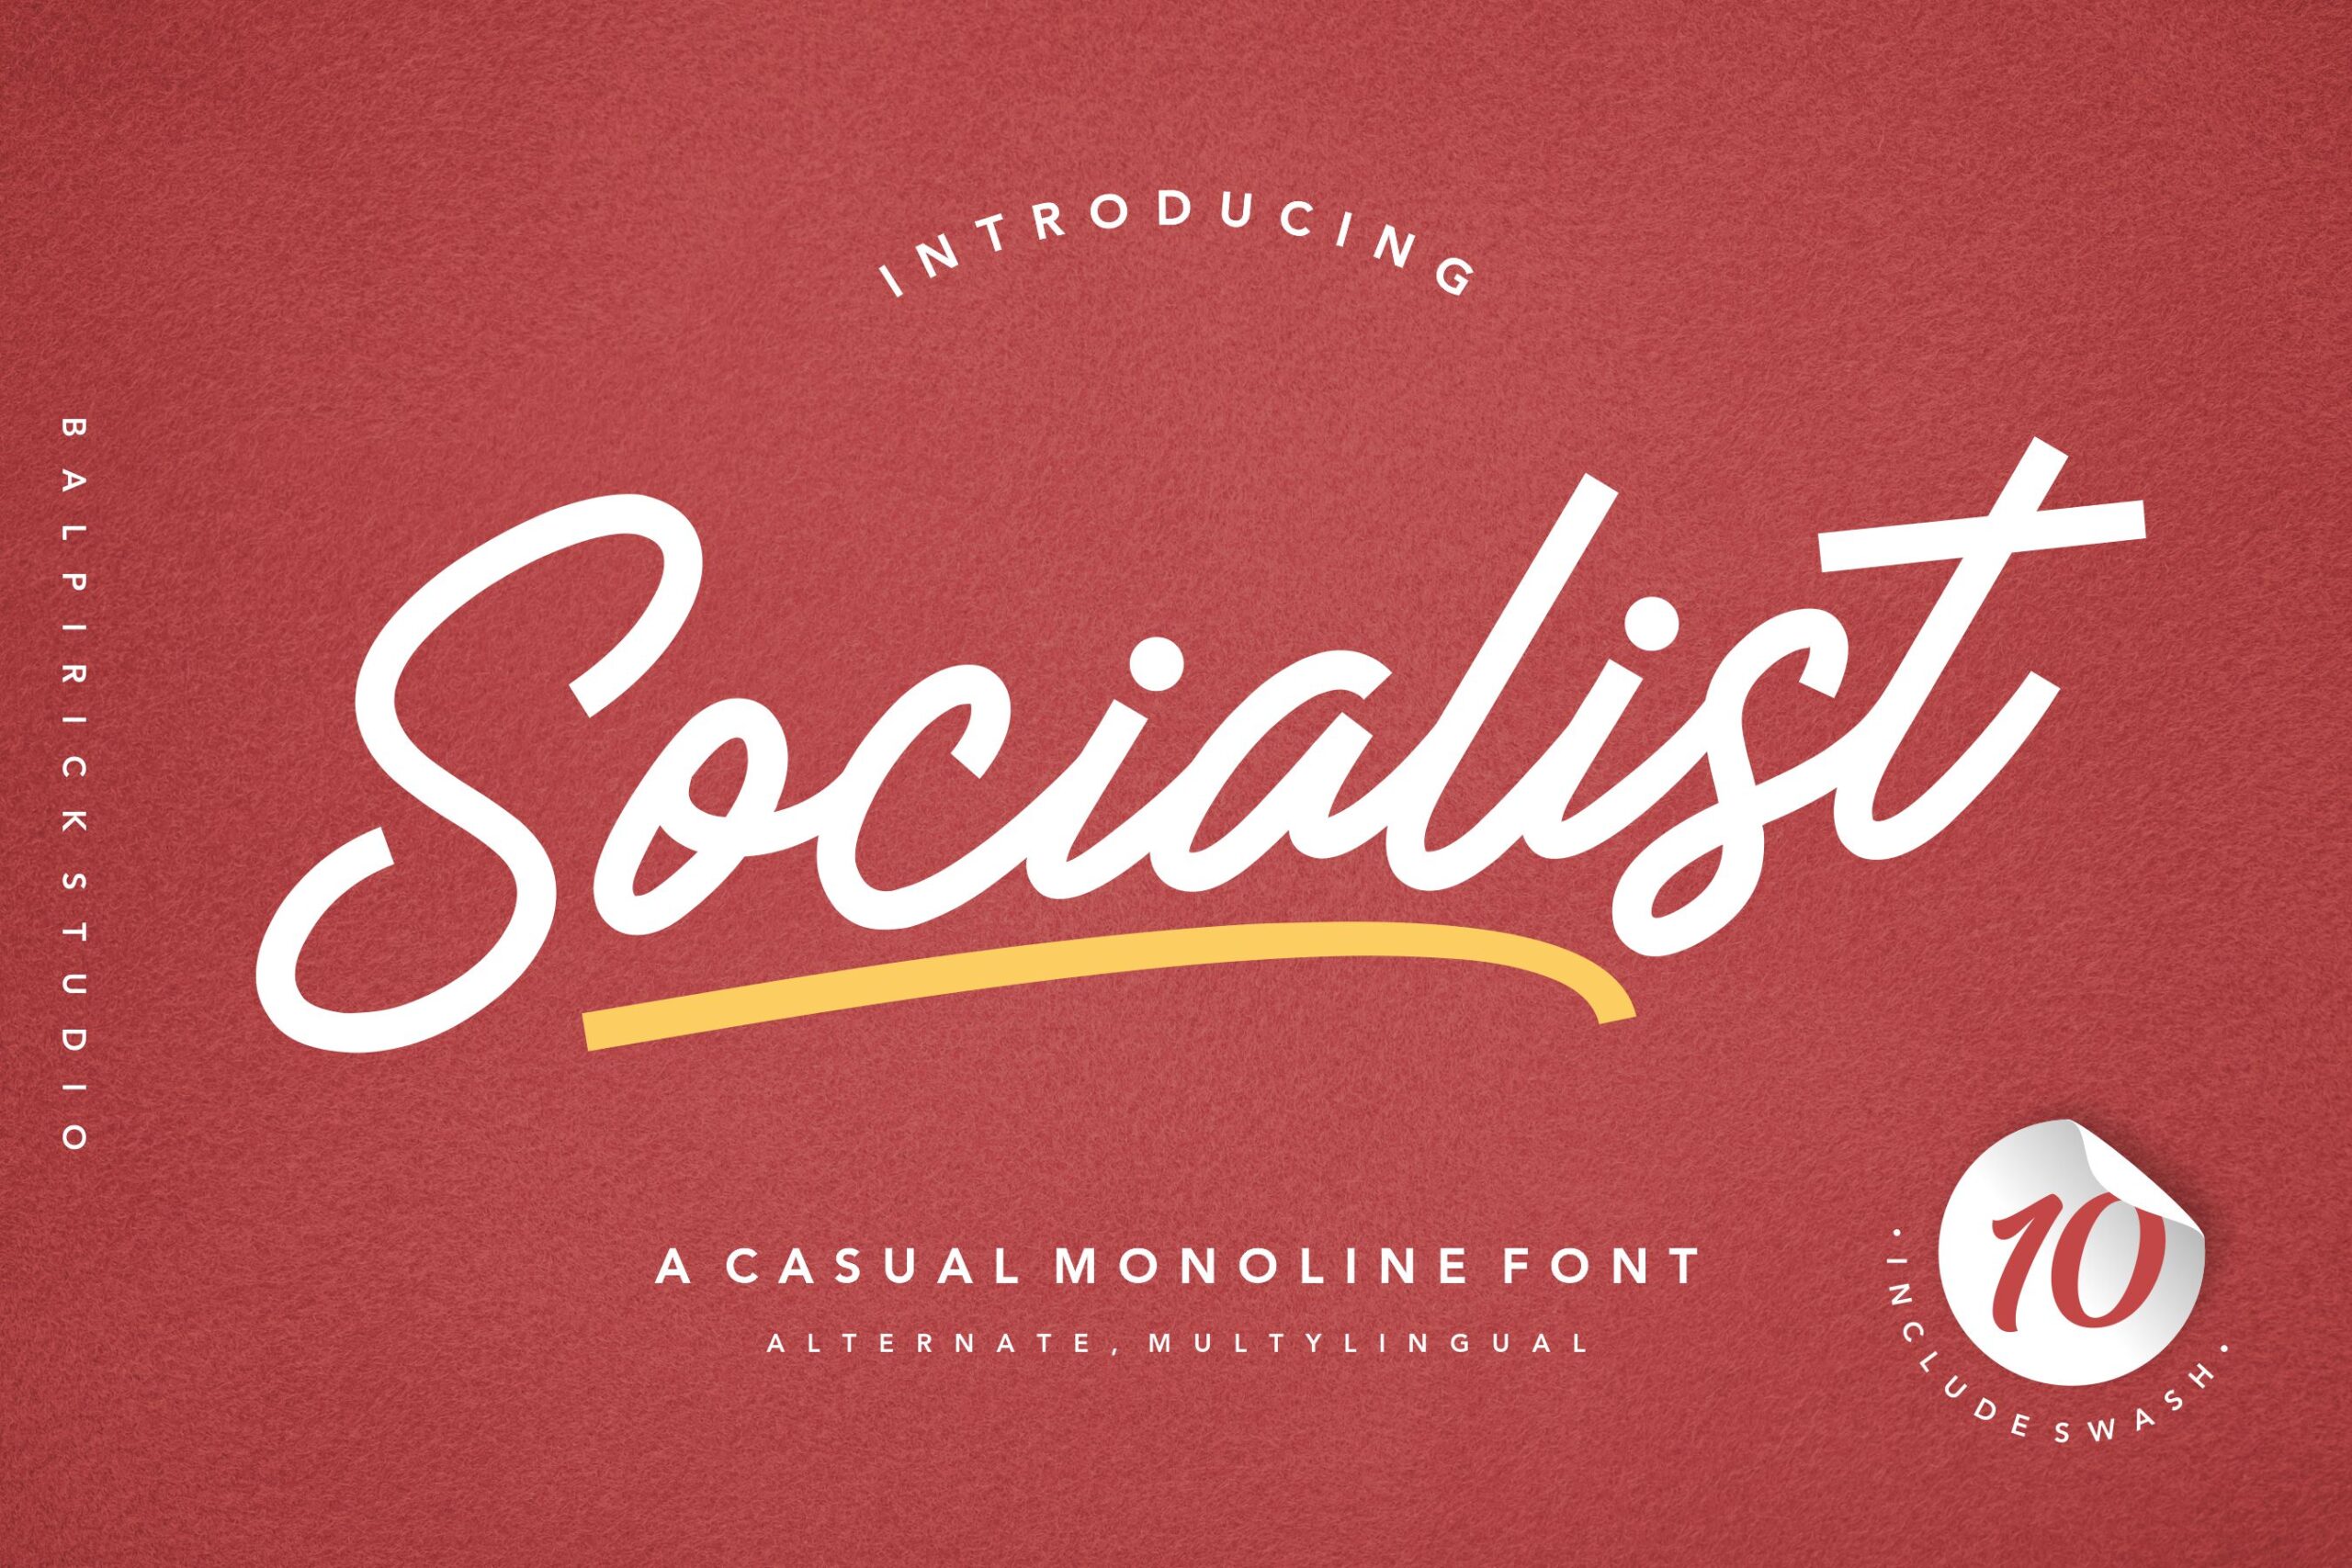 Socialist a Casual Monoline Free Font